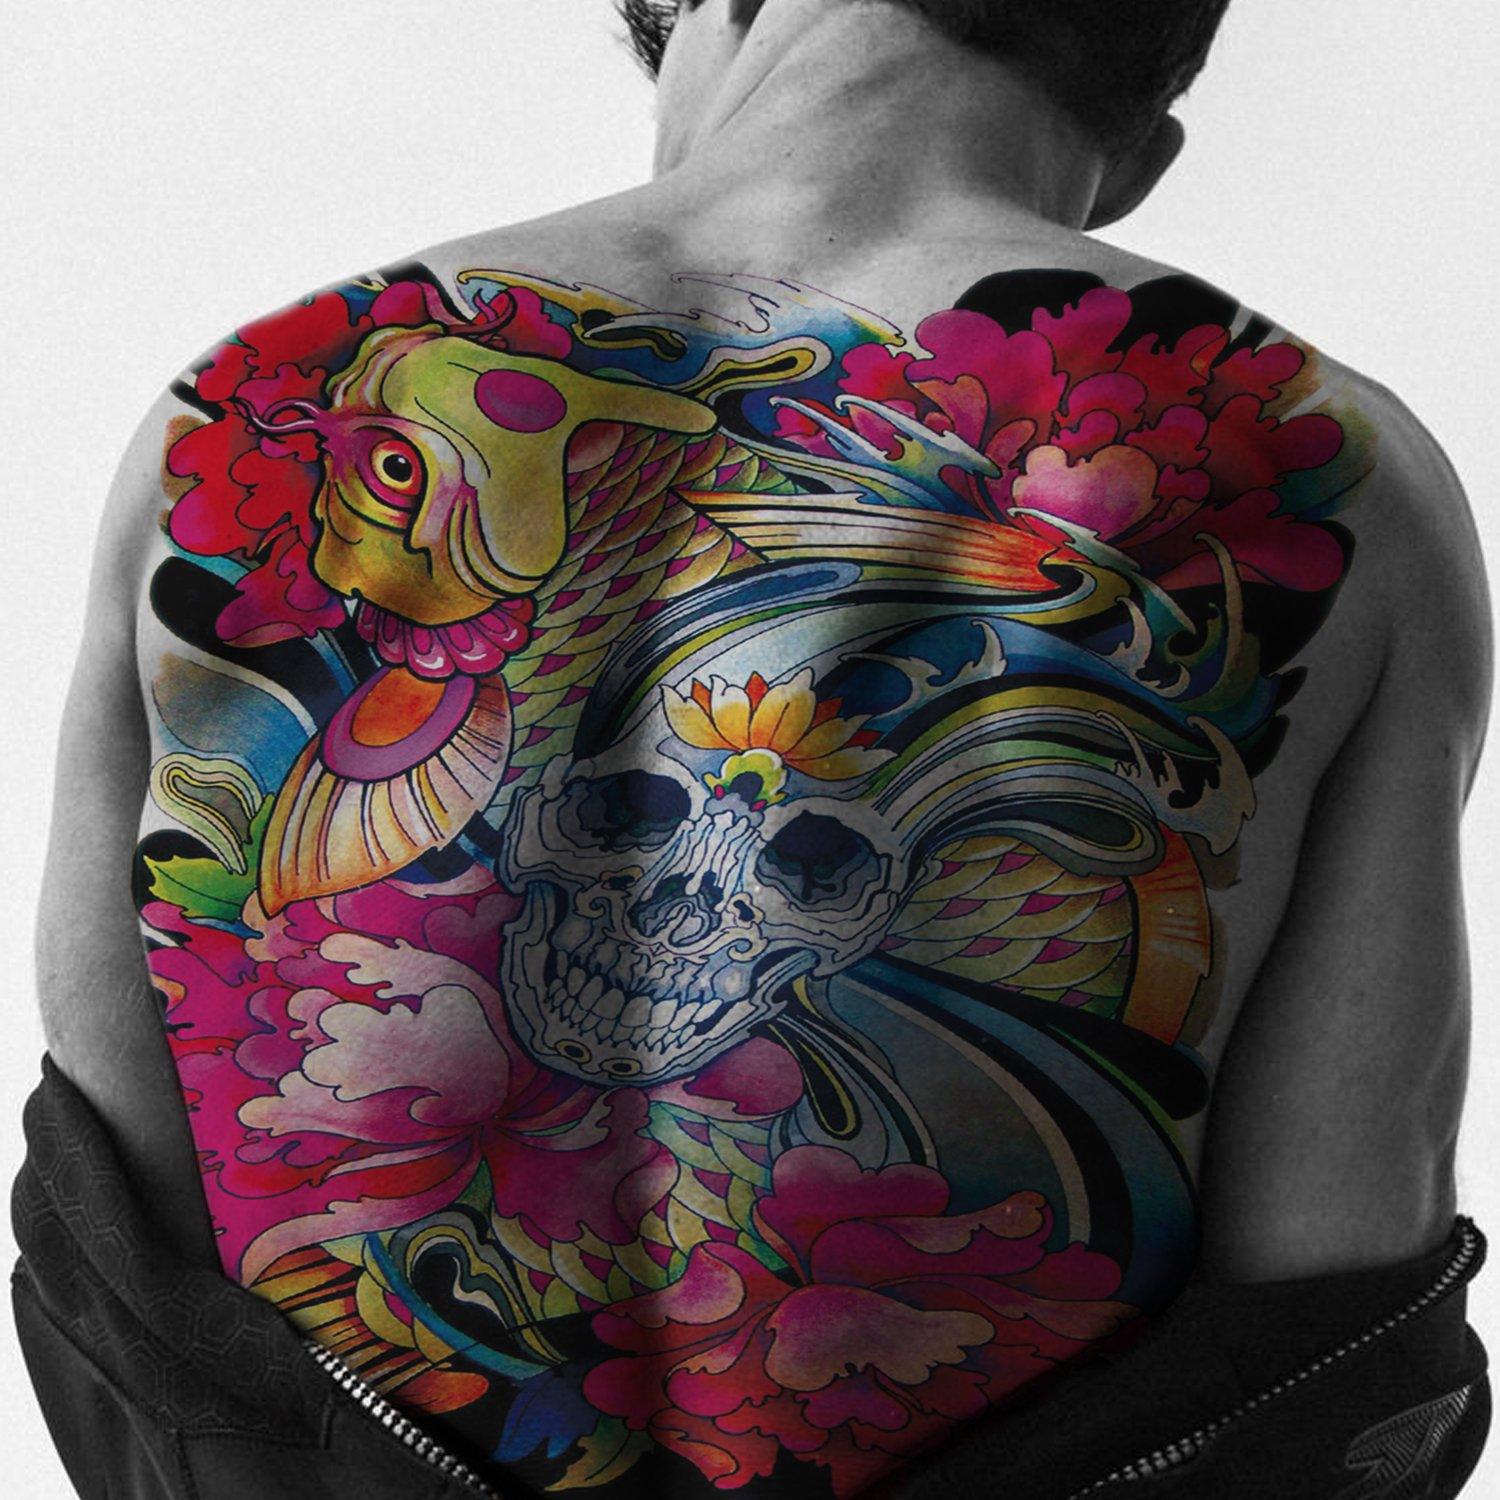 Skull Flower Carp Full Back Temporary Tattoo - StiCool